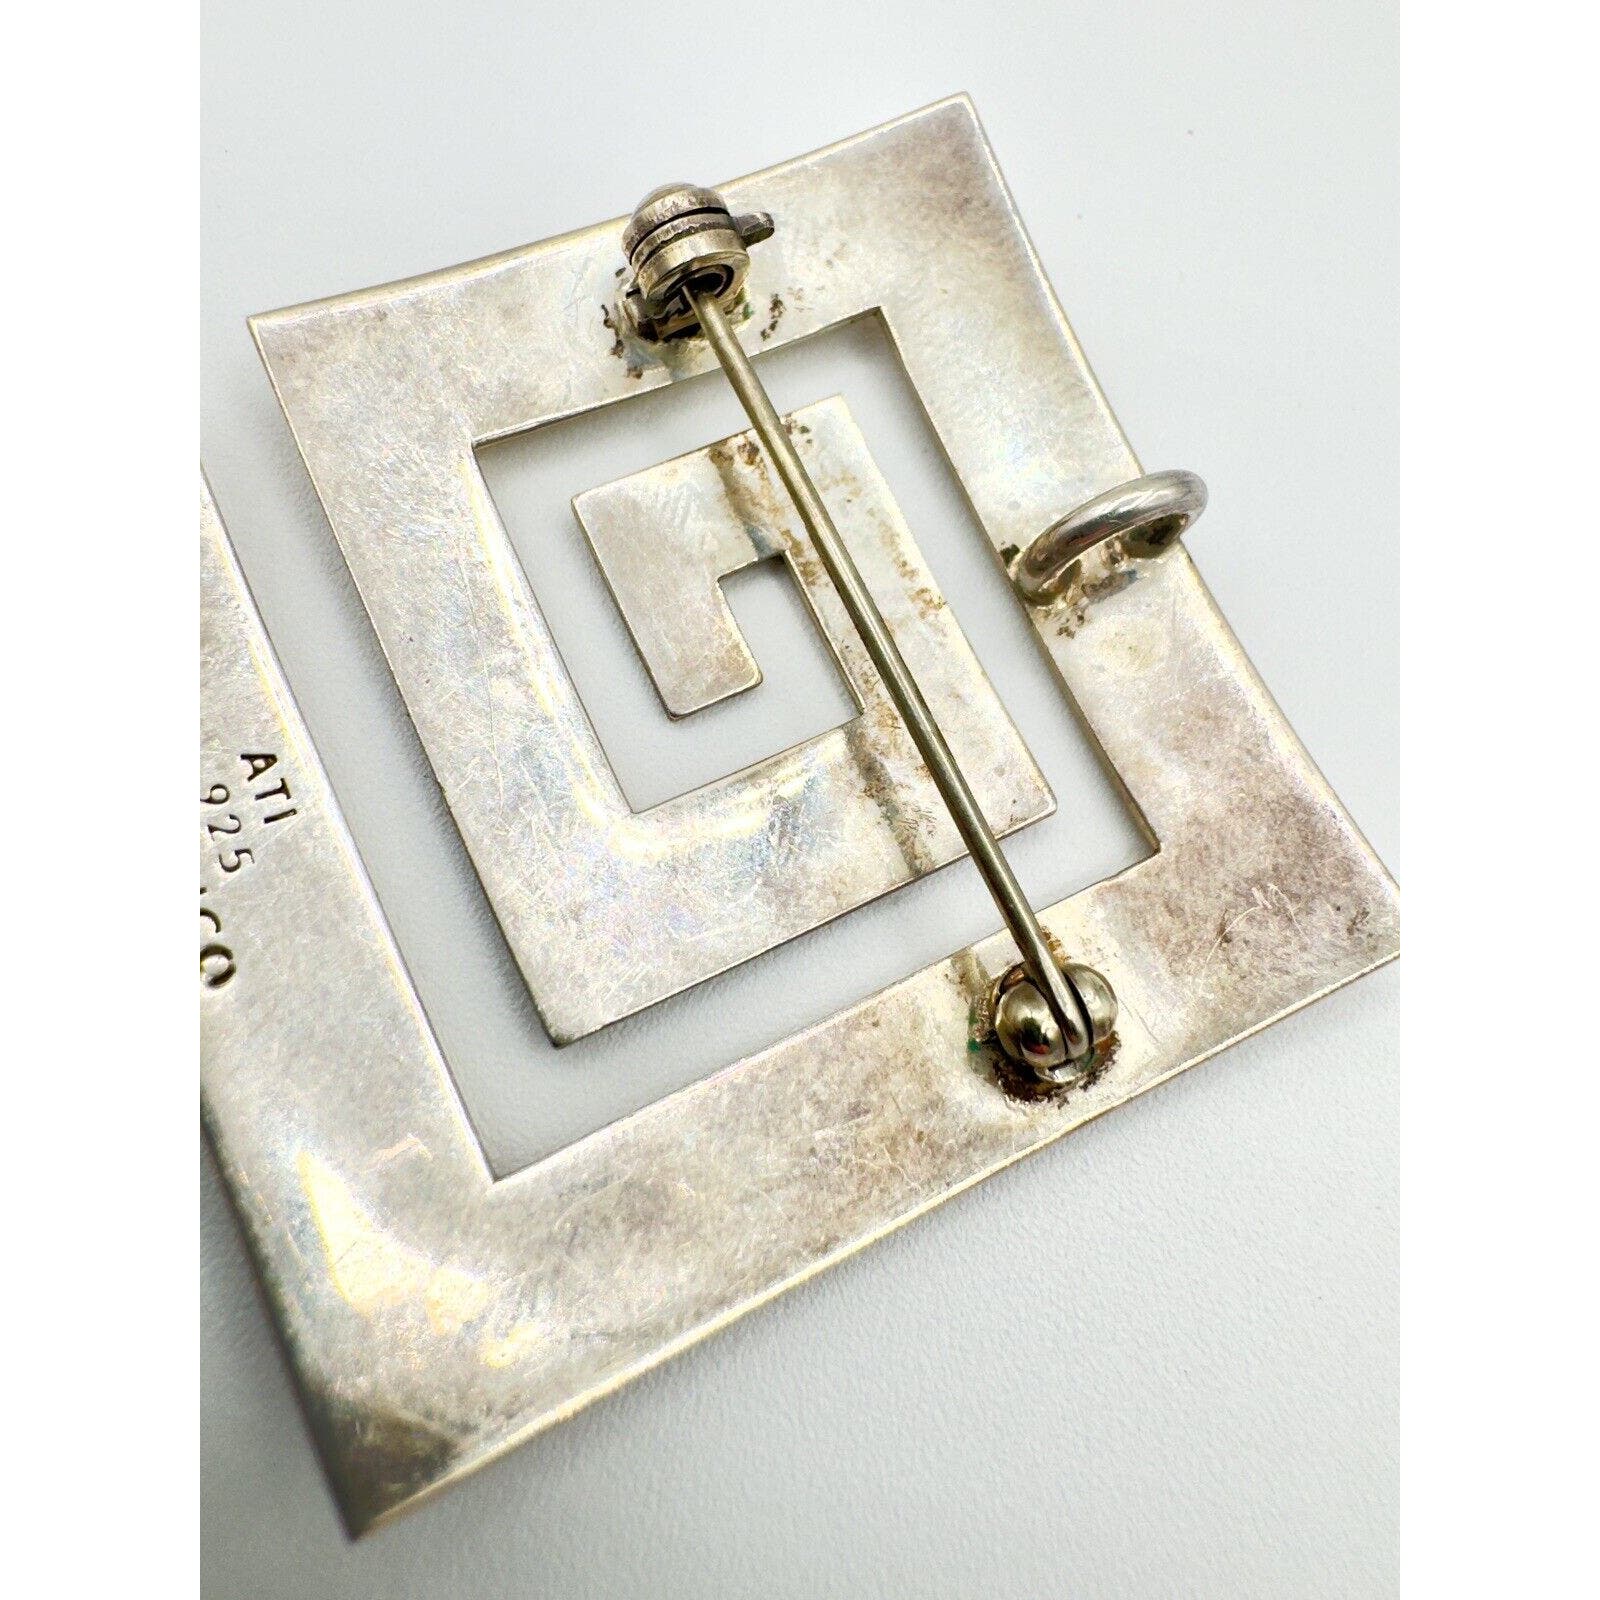 ATISterling Silver - Vintage Modernist Greek Key Brooch Pin Stamped ATI 925 Mexico - Black Dog Vintage